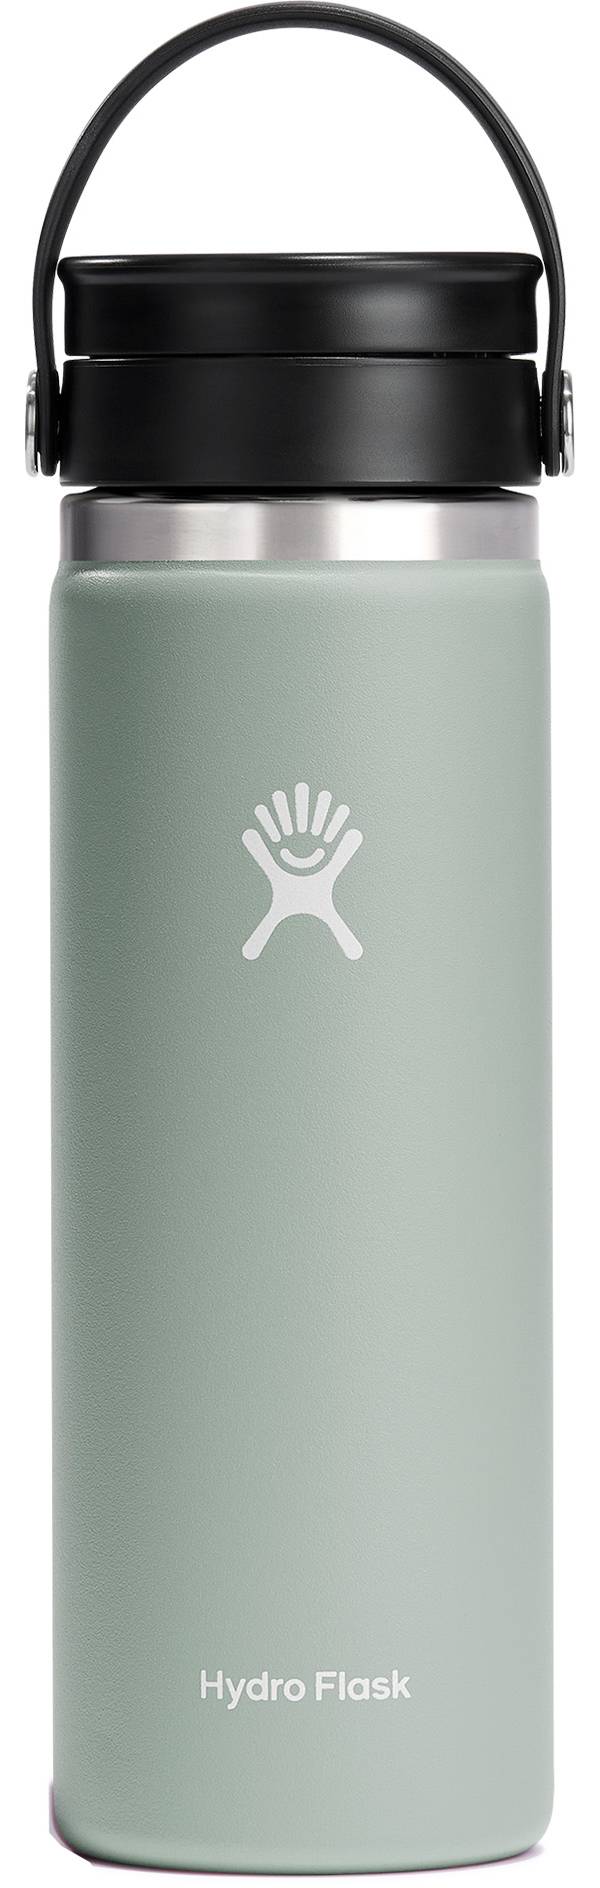 Hydro Flask 20 oz. Flex Sip Bottle product image